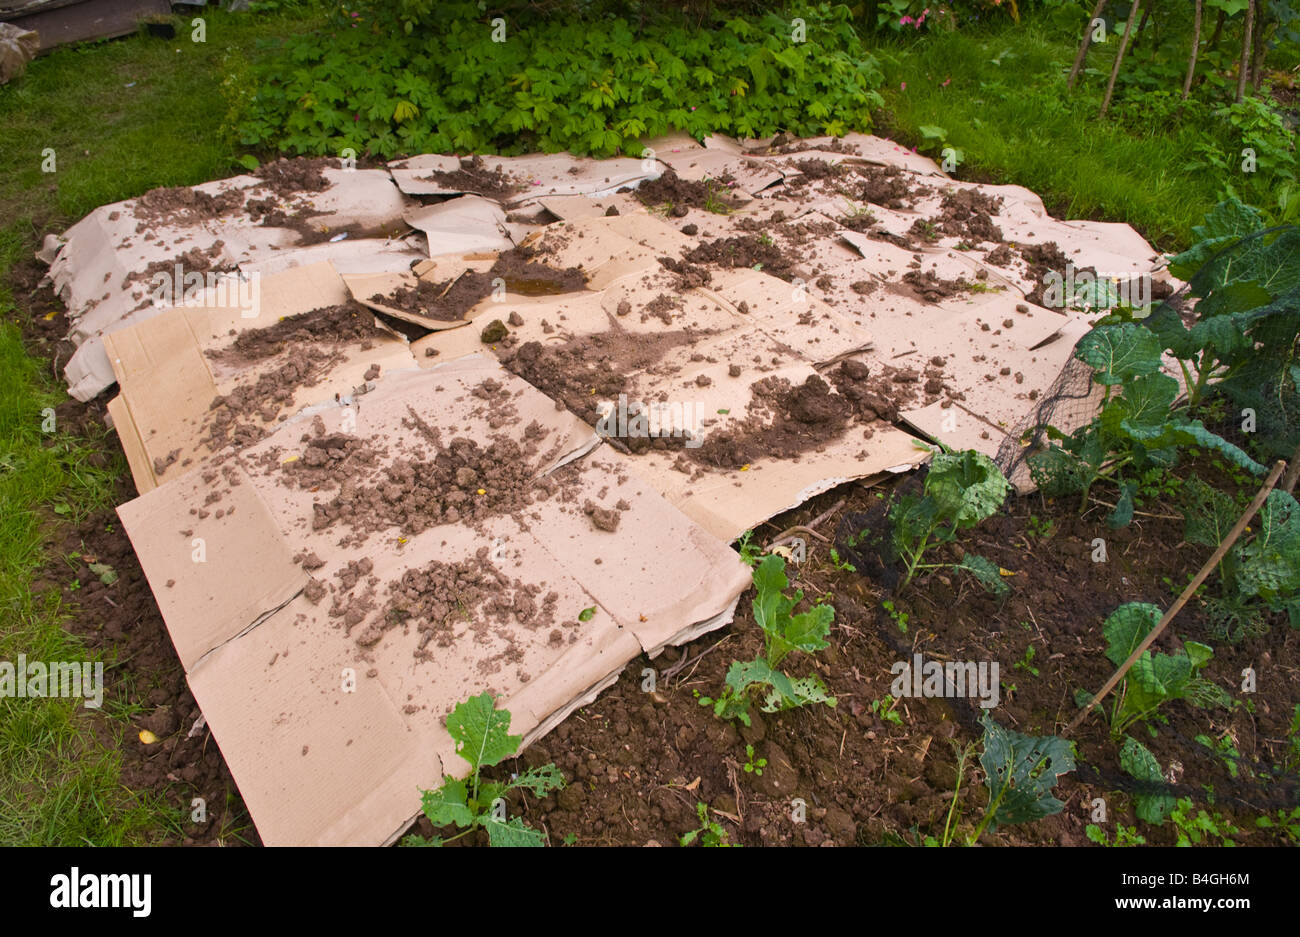 Cardboard mulch -Fotos und -Bildmaterial in hoher Auflösung – Alamy